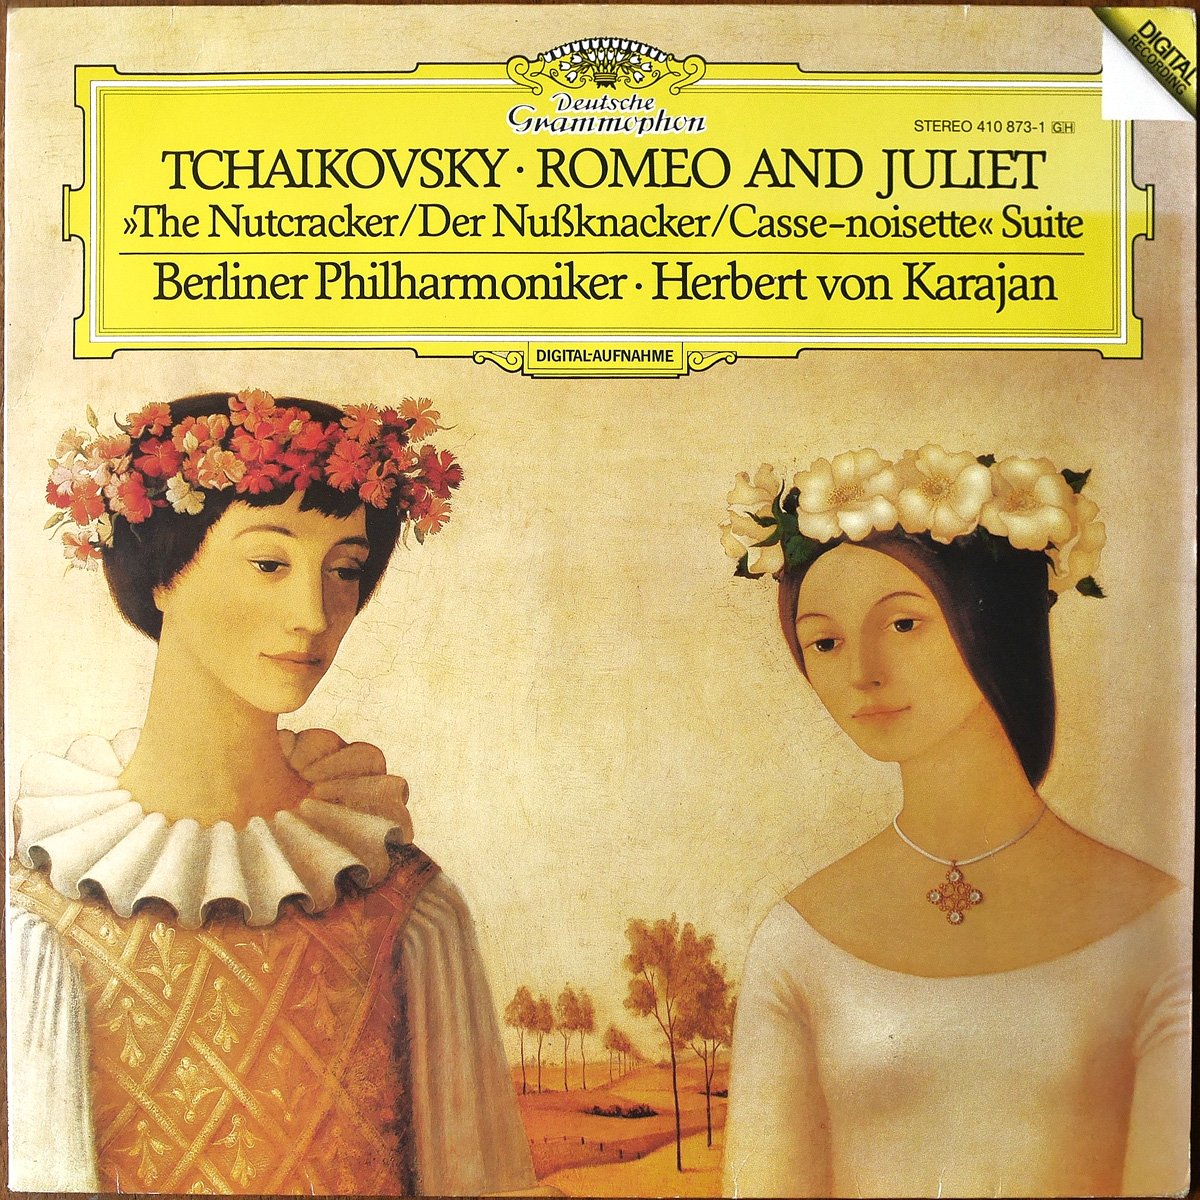 DGG 410 873 Tchaikovsky Romeo & Juliette The Nutcracker Karajan DGG Digital Aufnahme